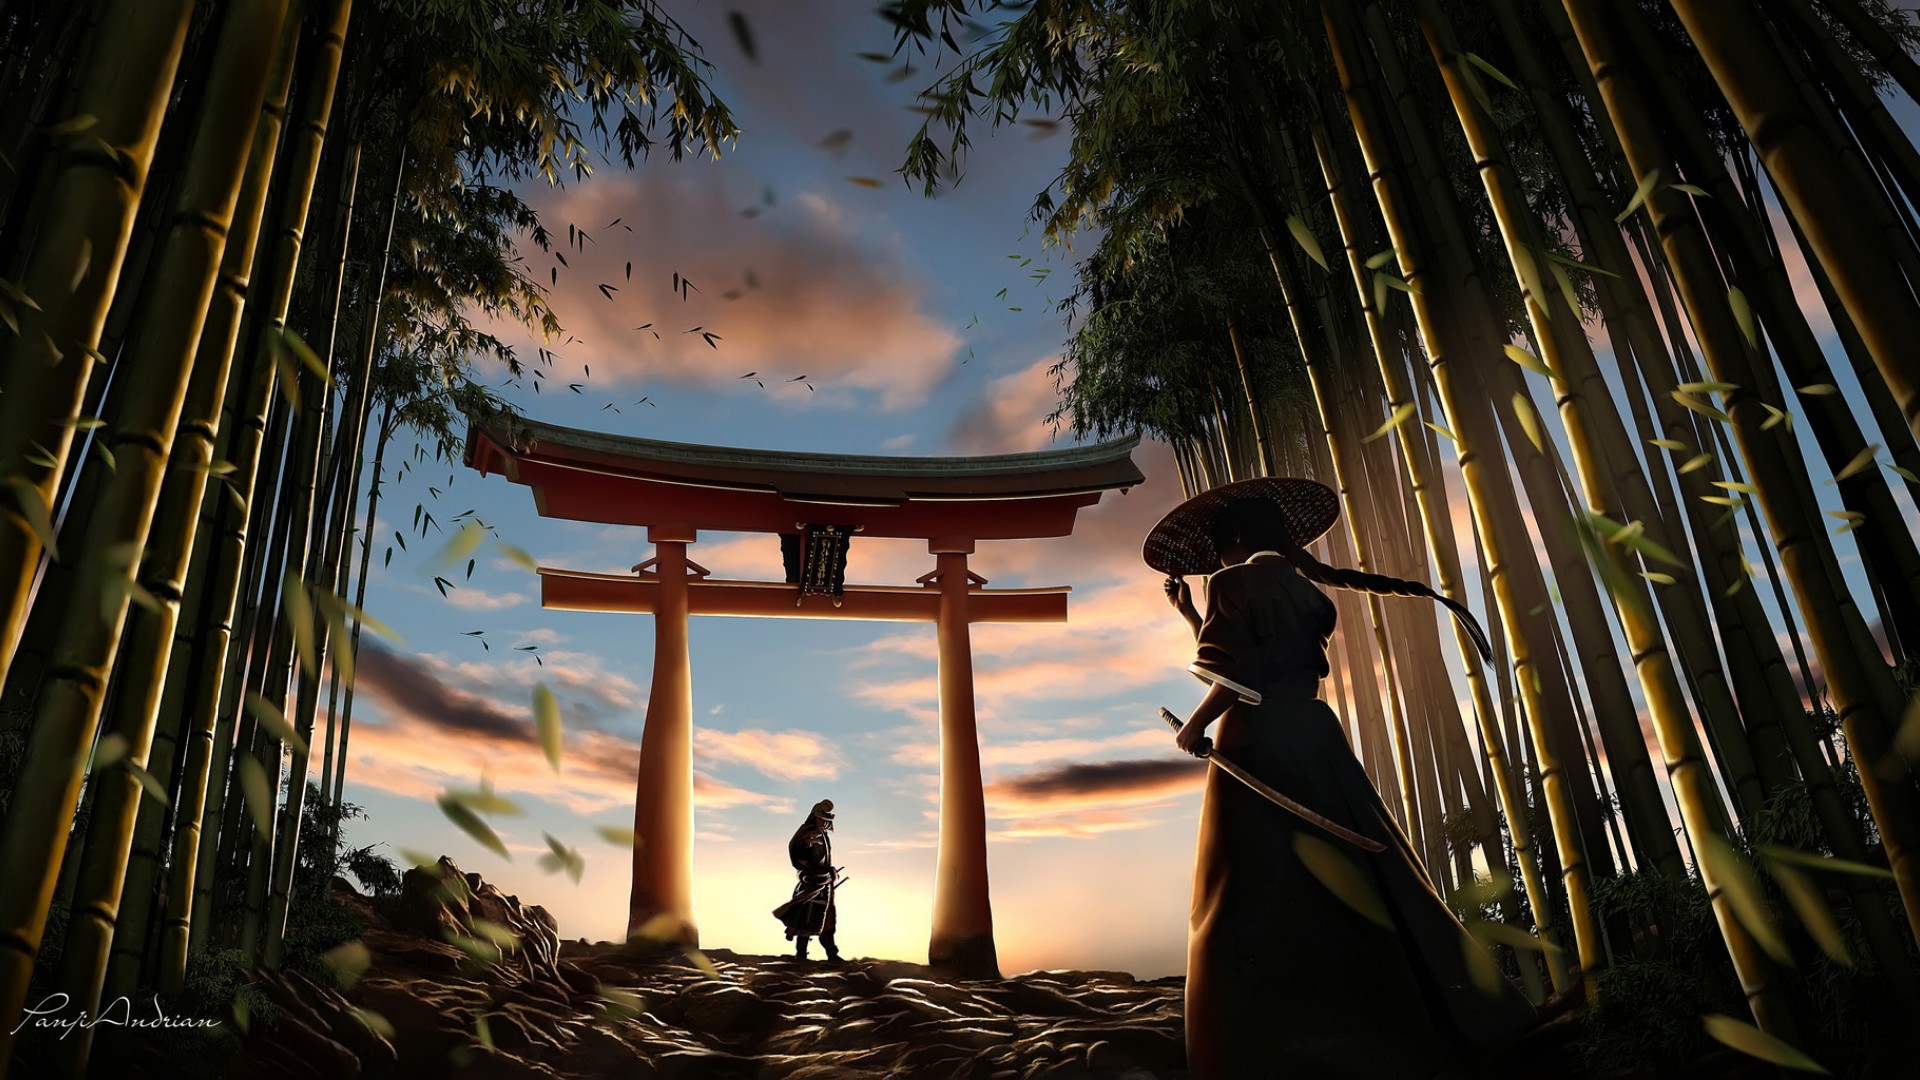 997821 descargar imagen guerrero, fantasía, samurái, cielo, torii: fondos de pantalla y protectores de pantalla gratis